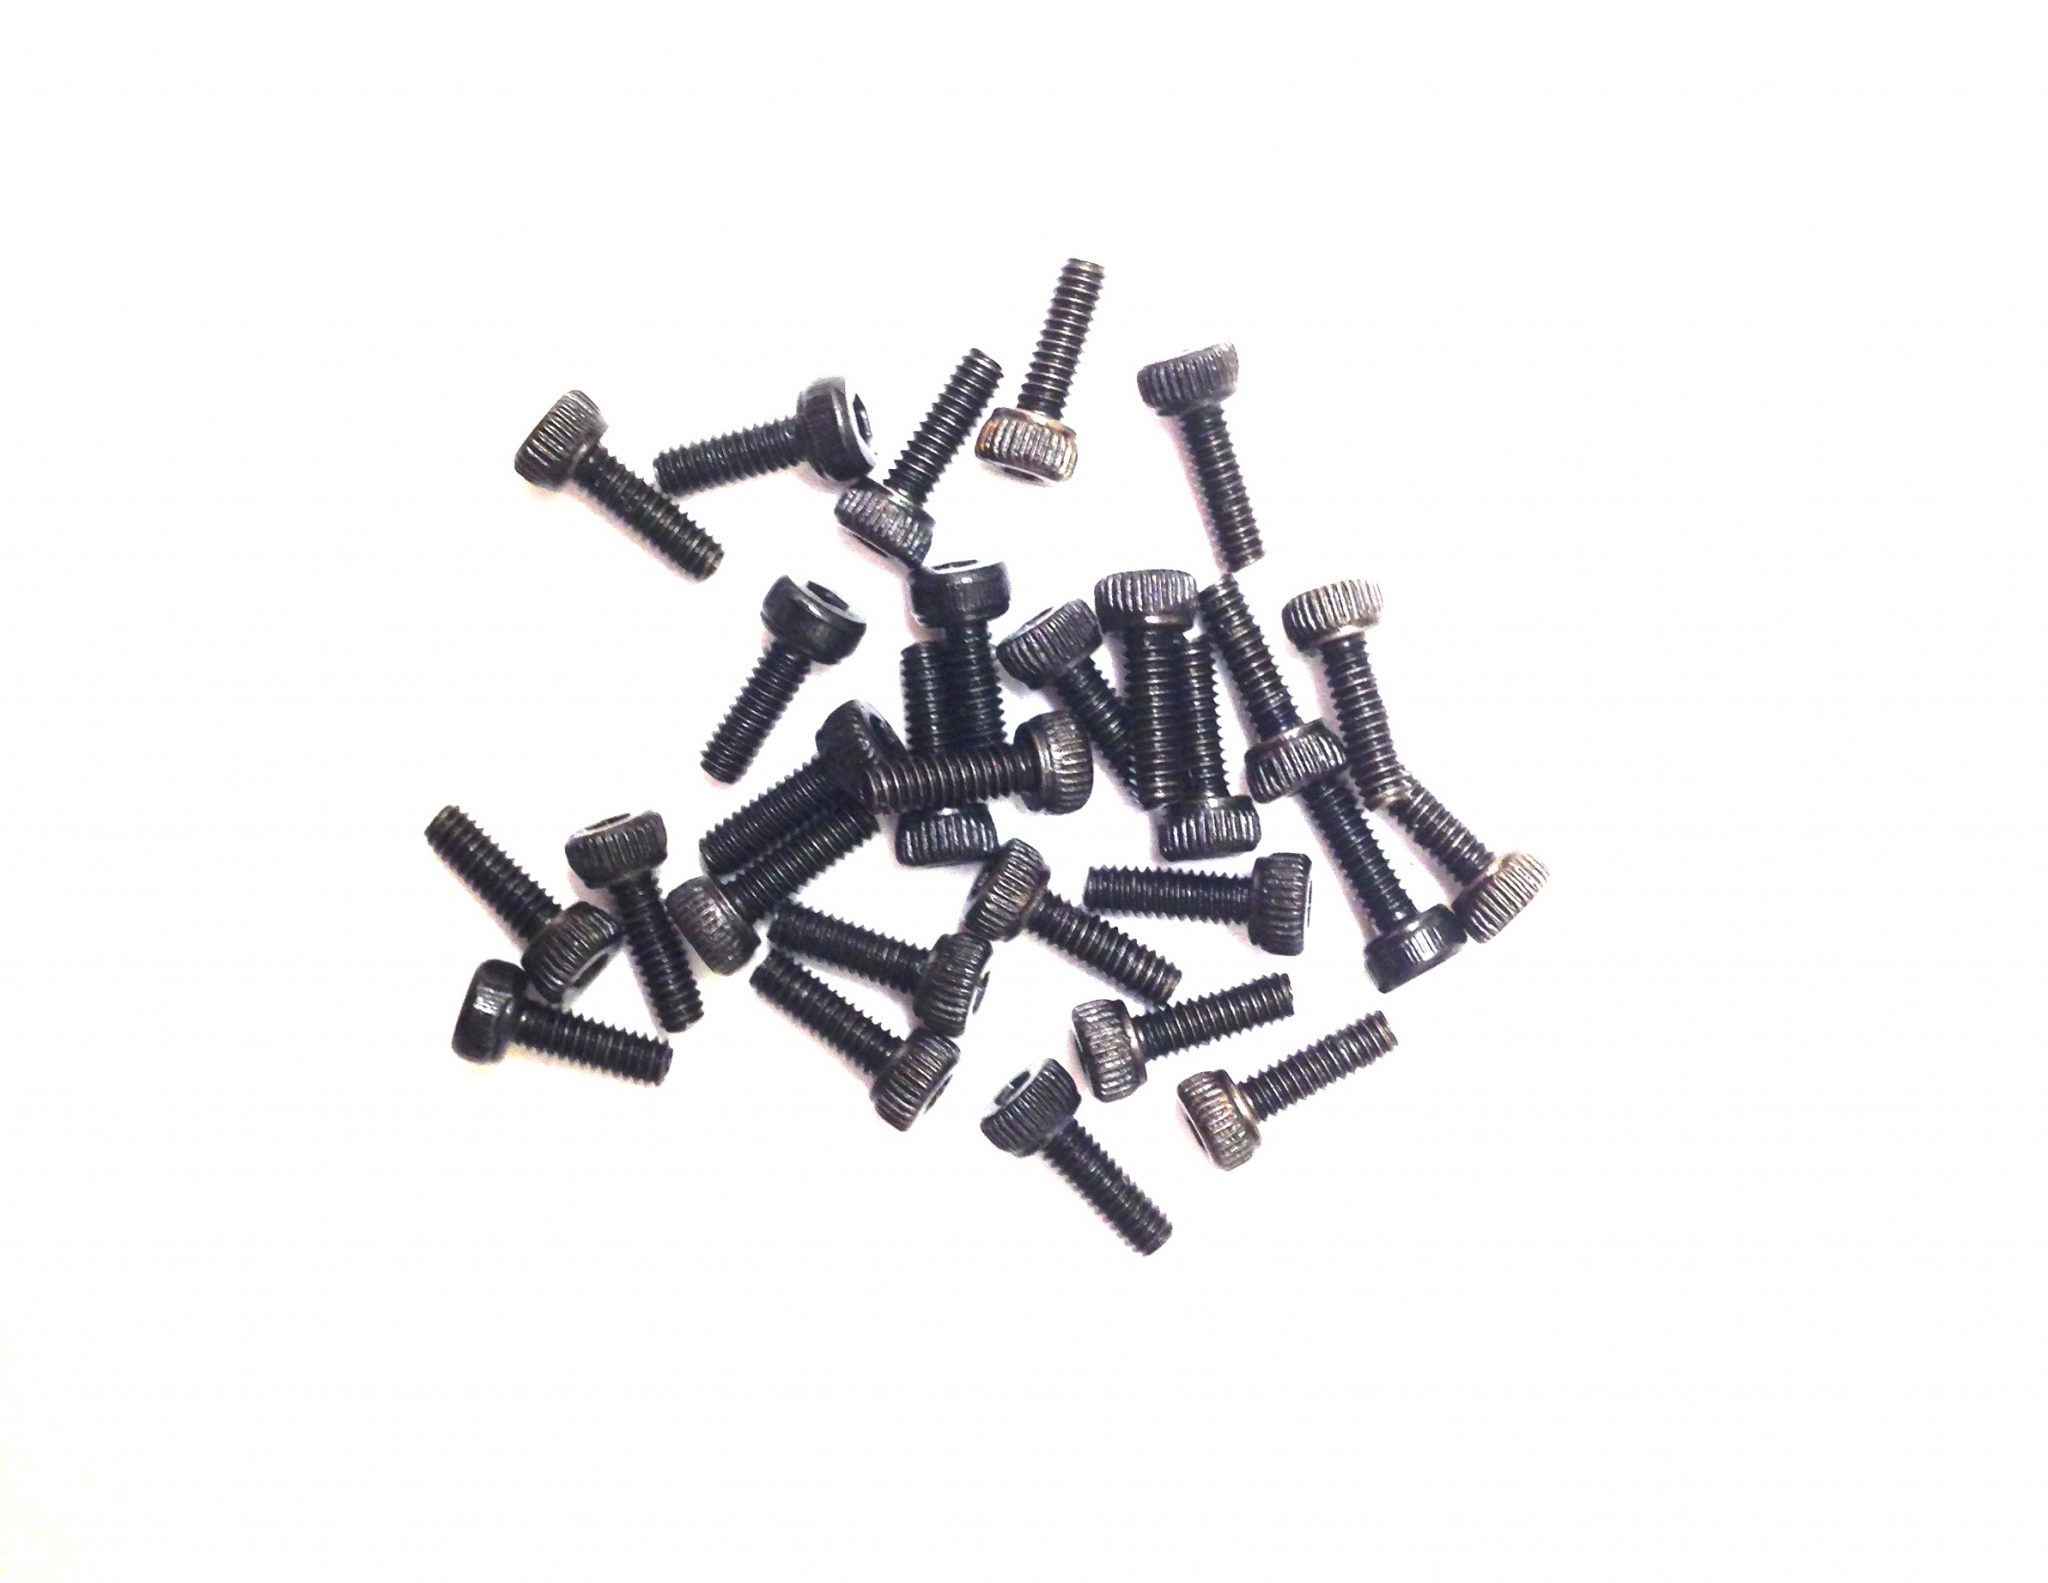 100pcs of 20mm M2 Black hex head metal Screws